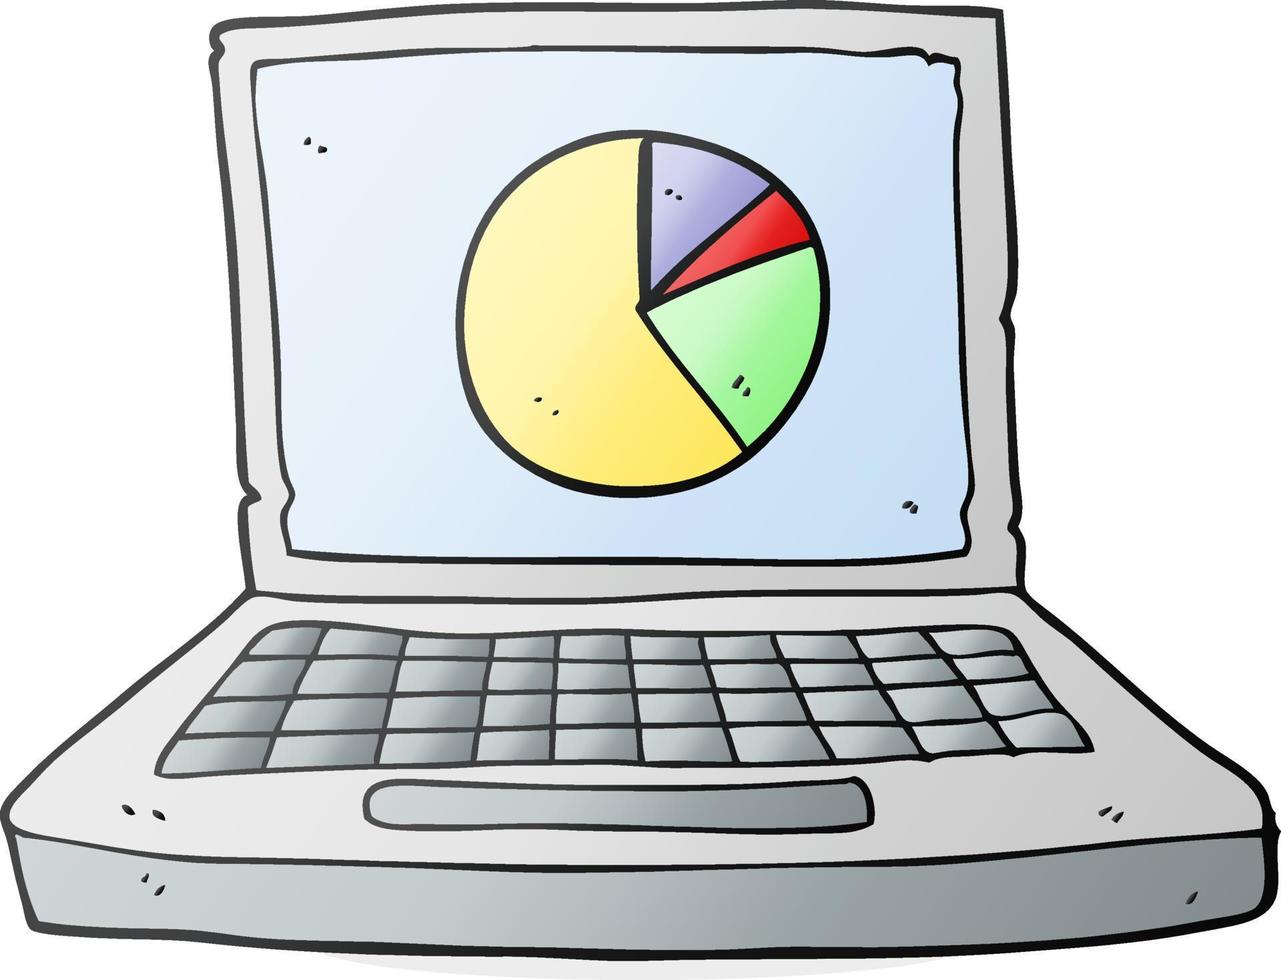 cartoon laptop computer with pie chart vector